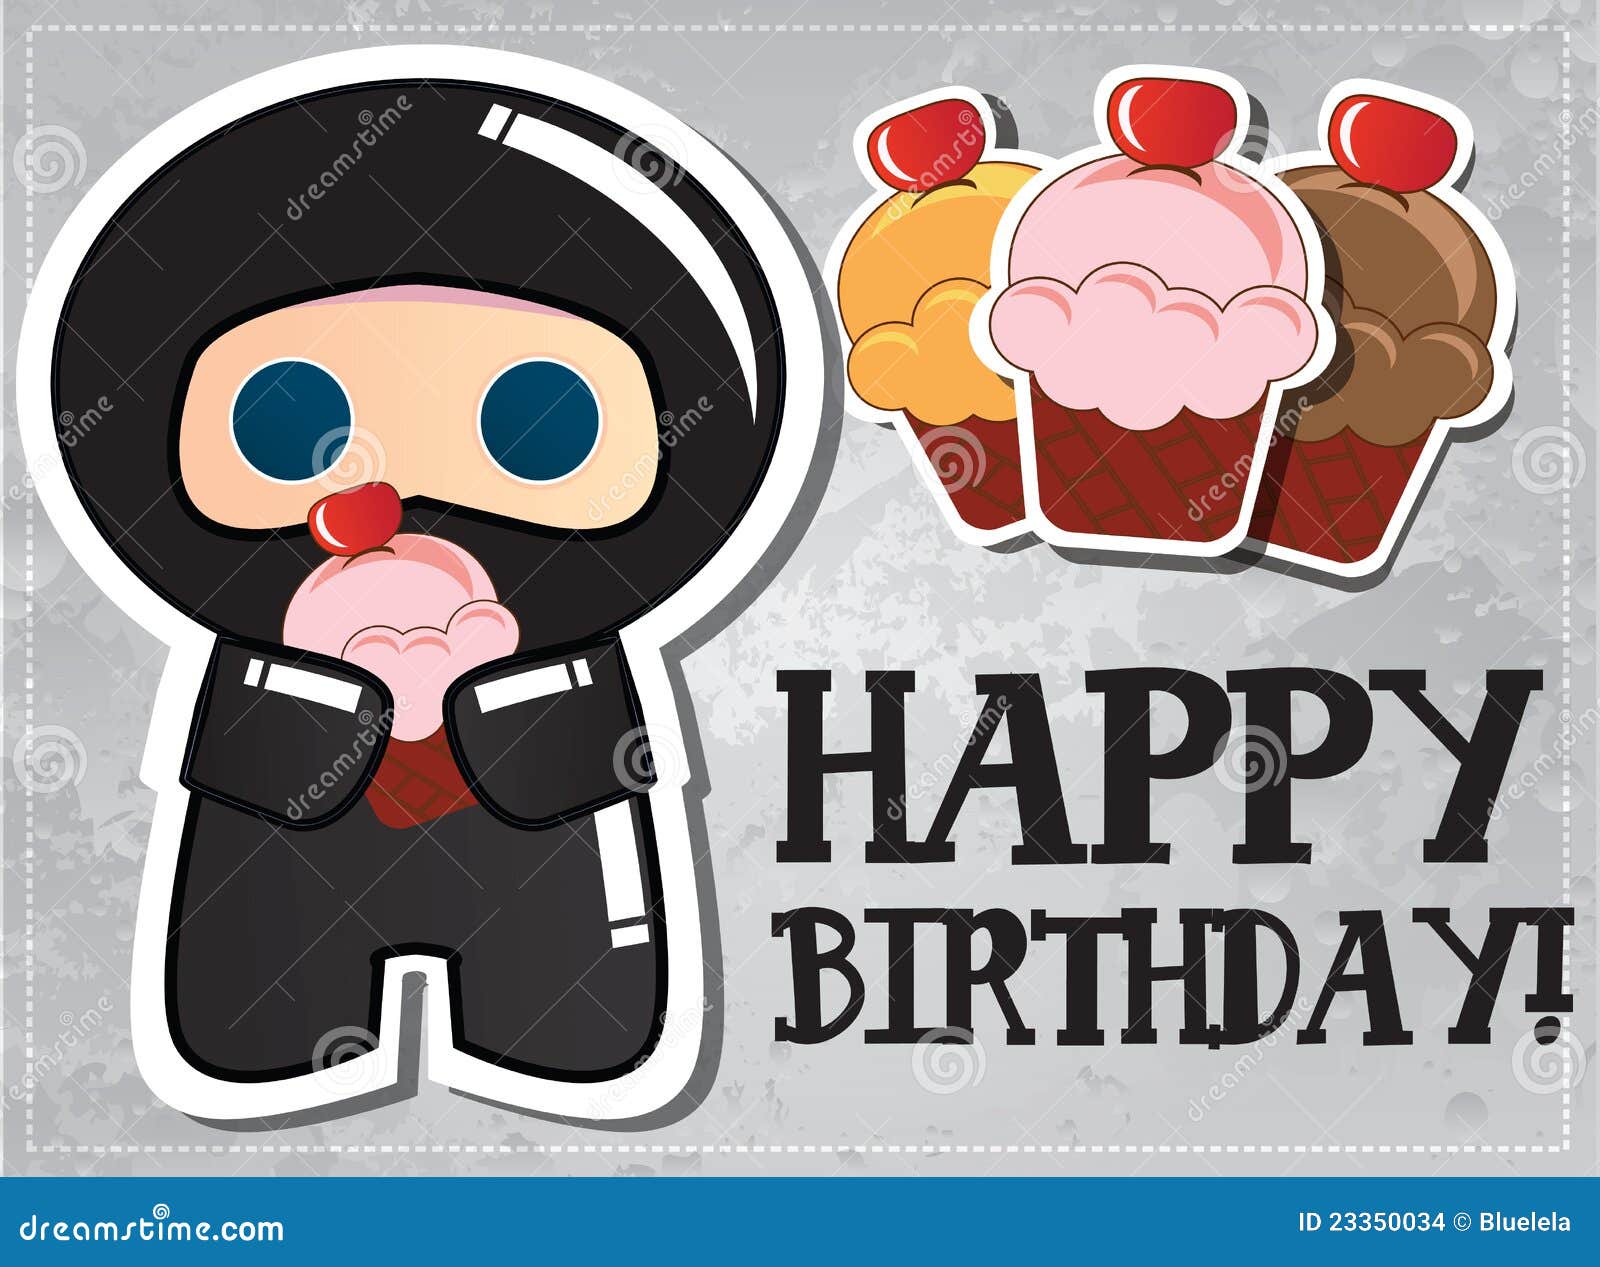 Happy Birthday Card With Cute Cartoon Ninja Stock Images - Image: 23350034